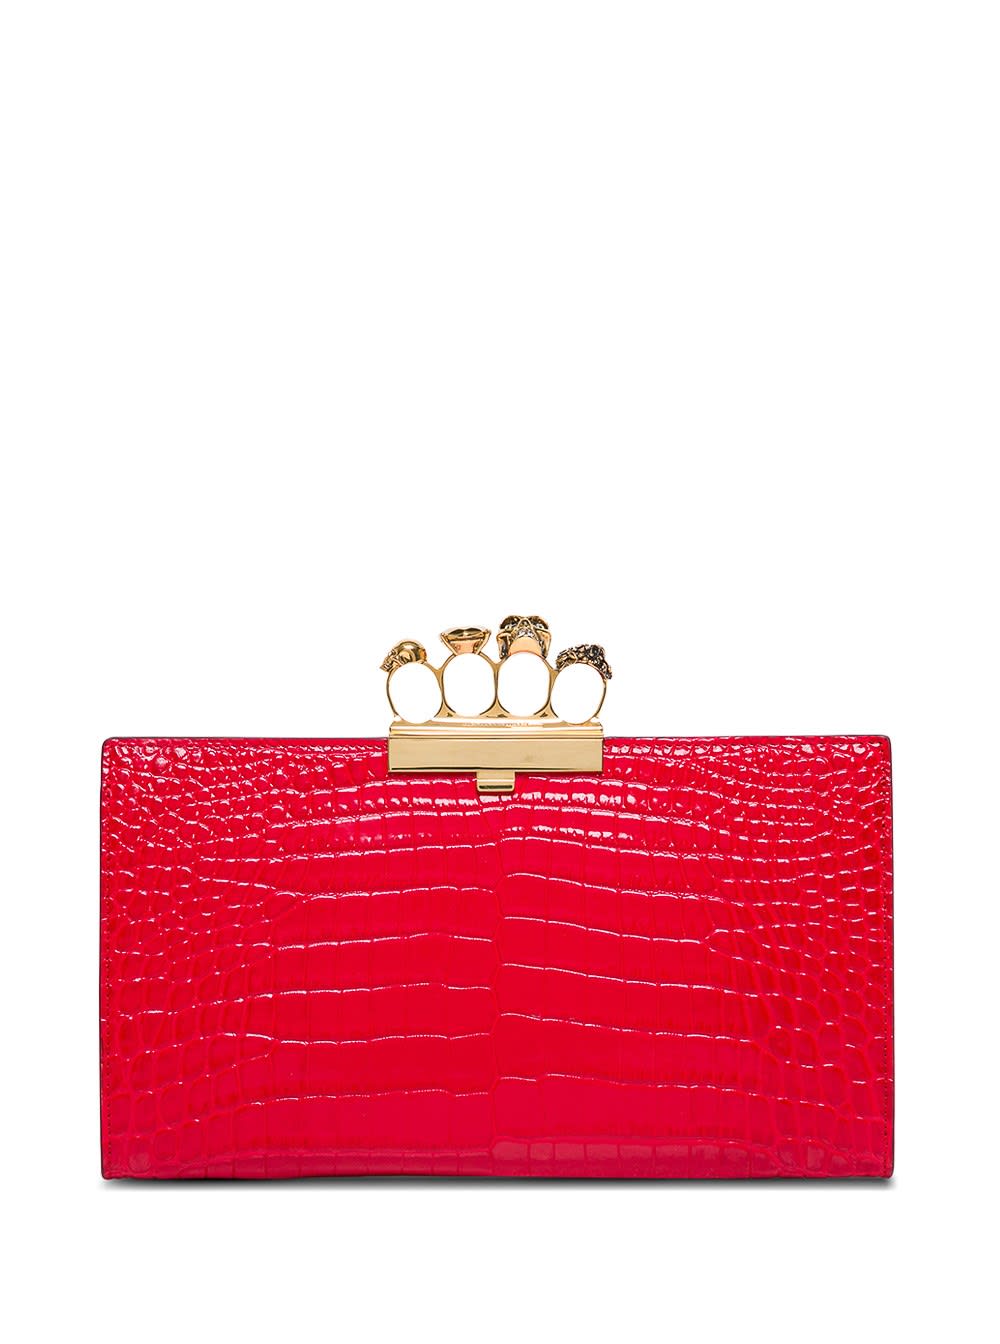 Alexander McQueen Skull Ring Handbag In Red Crocodile Printed Leather